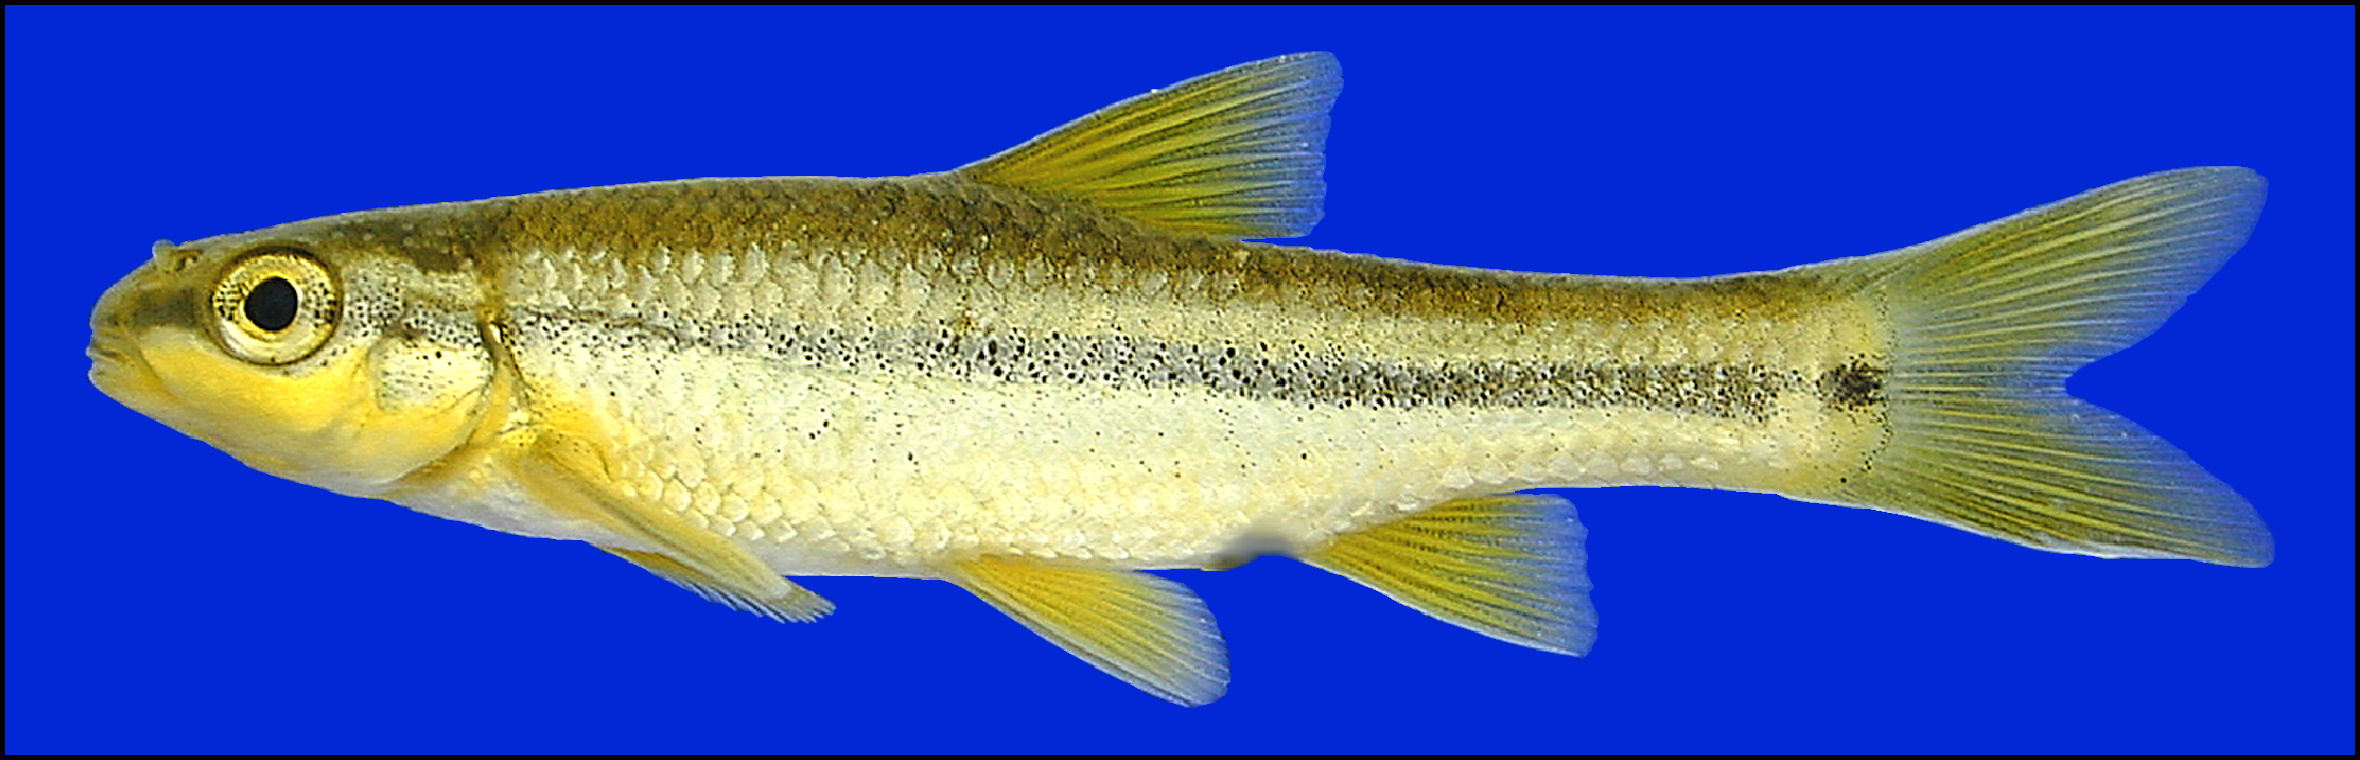 Minnow, Freshwater, Cyprinidae, Cypriniformes